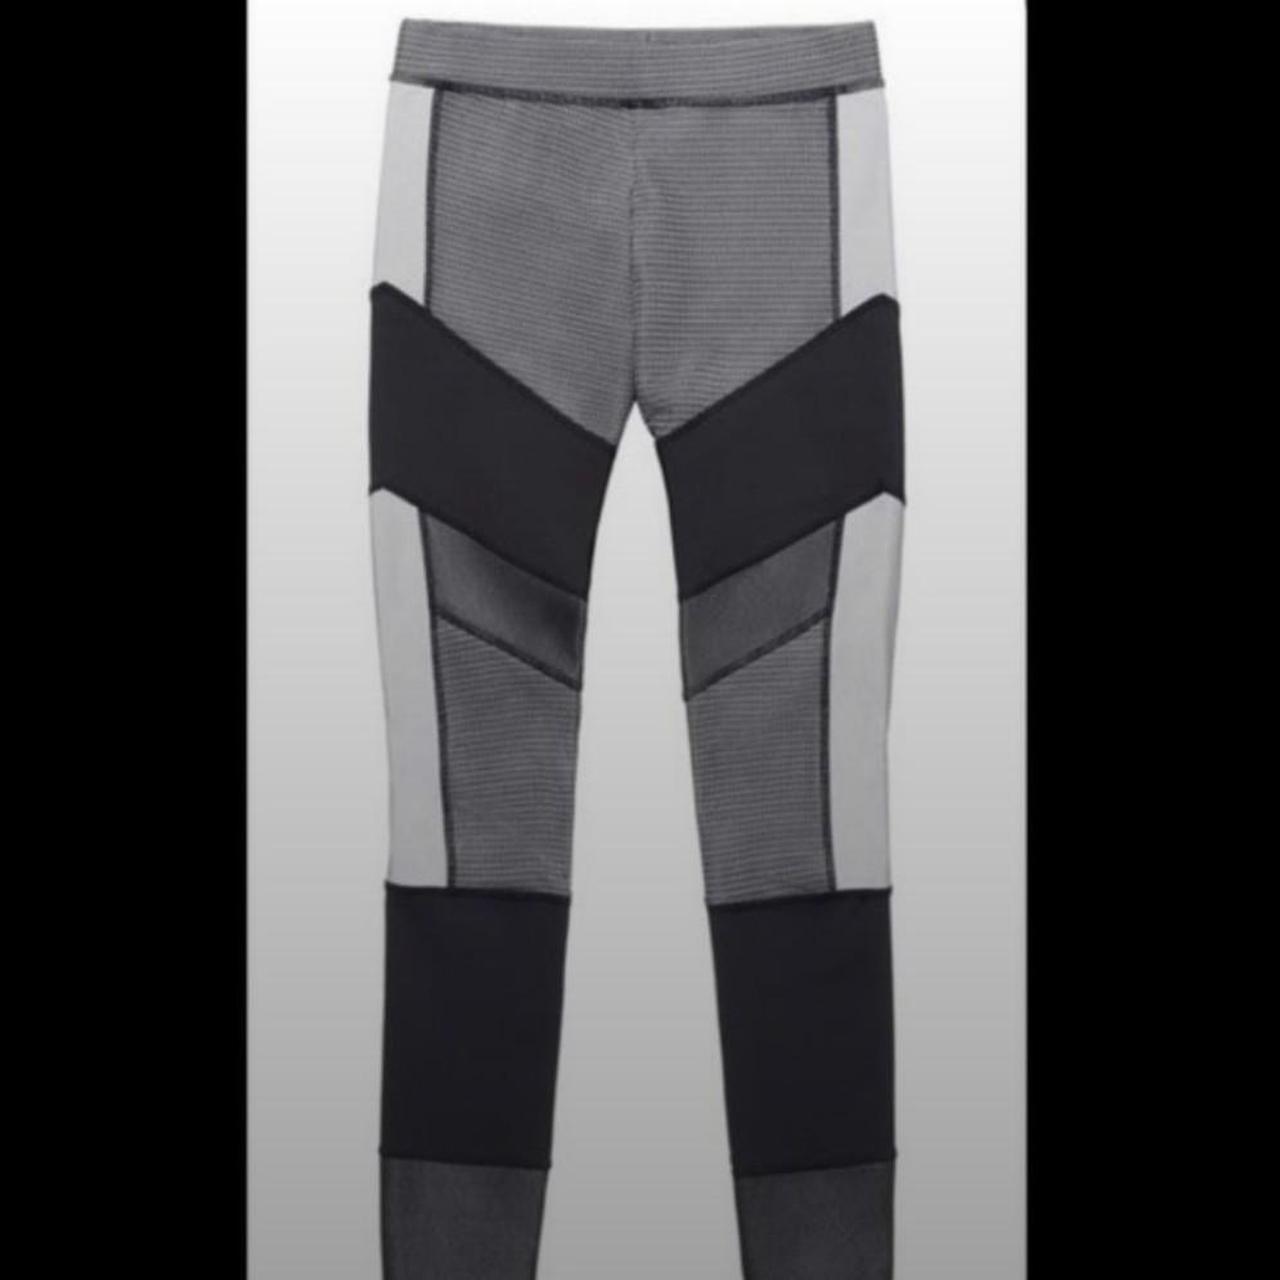 ALEXANDER WANG x H&M reflective leggings, Size 12.